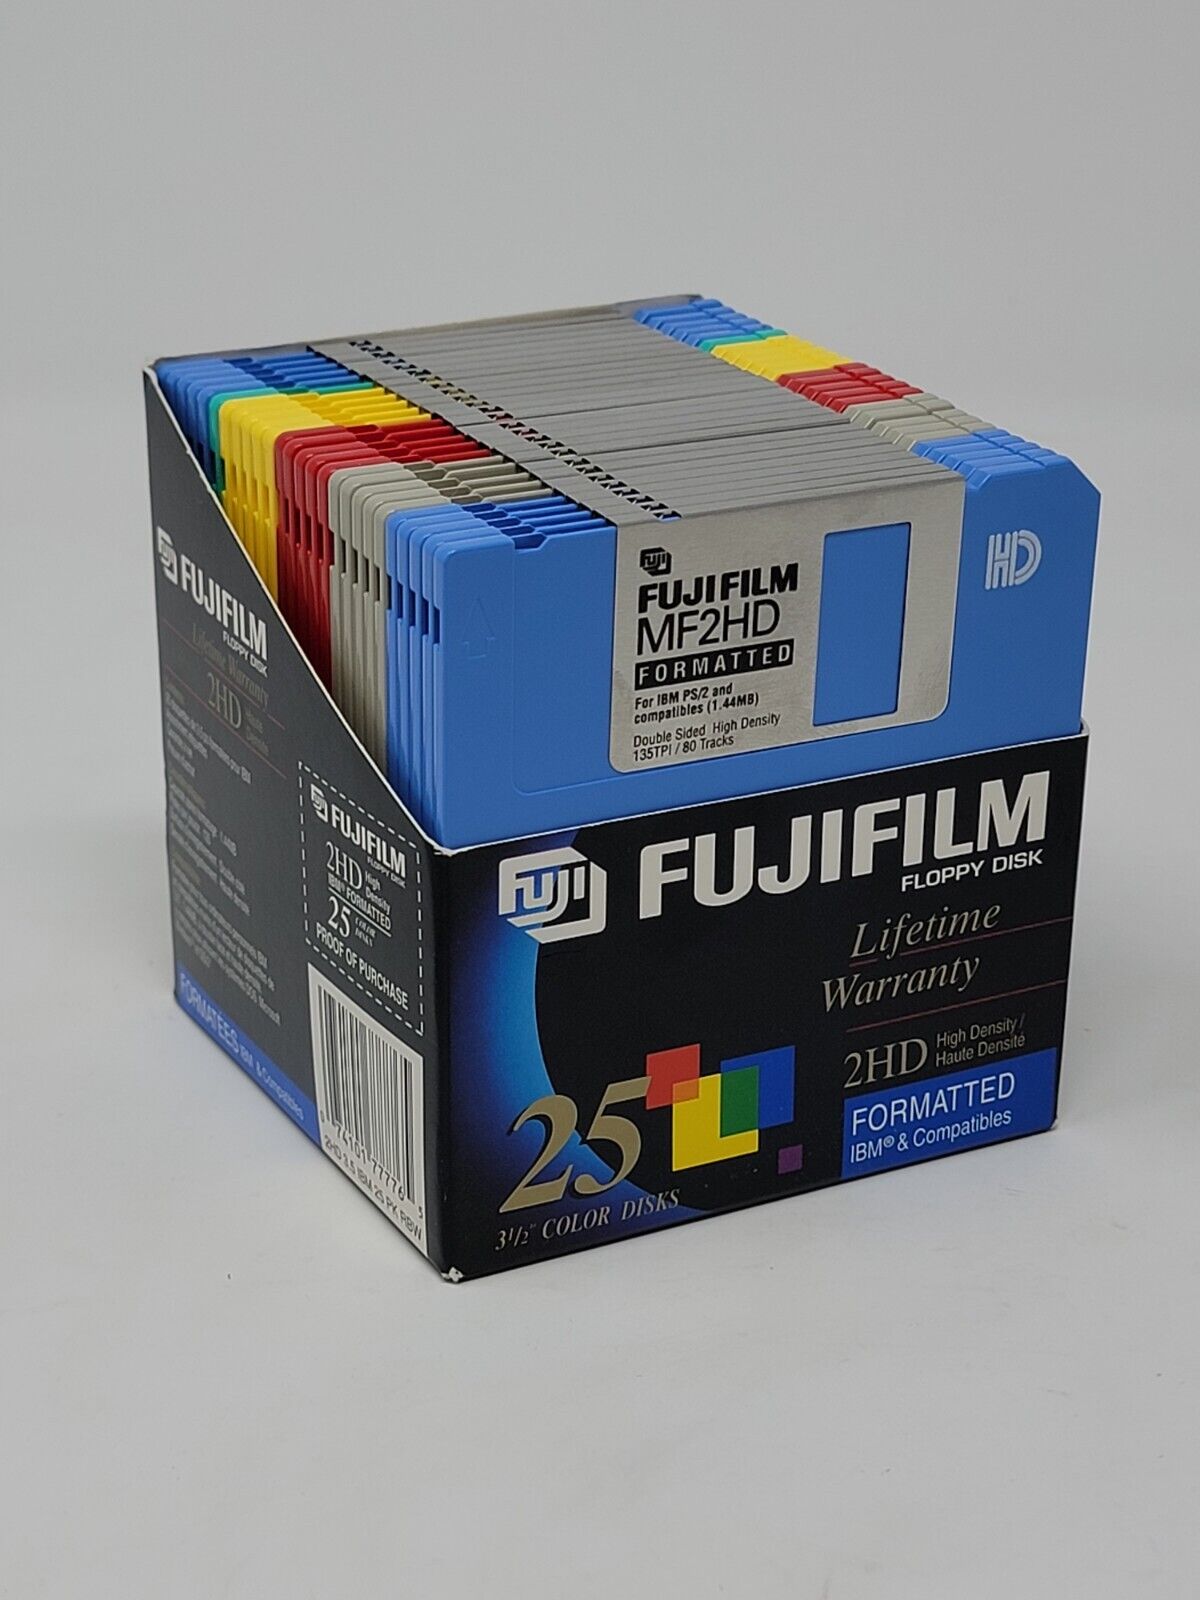 26 FujiFilm Fuji Film MF2HD 3.5” HD Floppy Disks PC DOS 6.3 Installed P